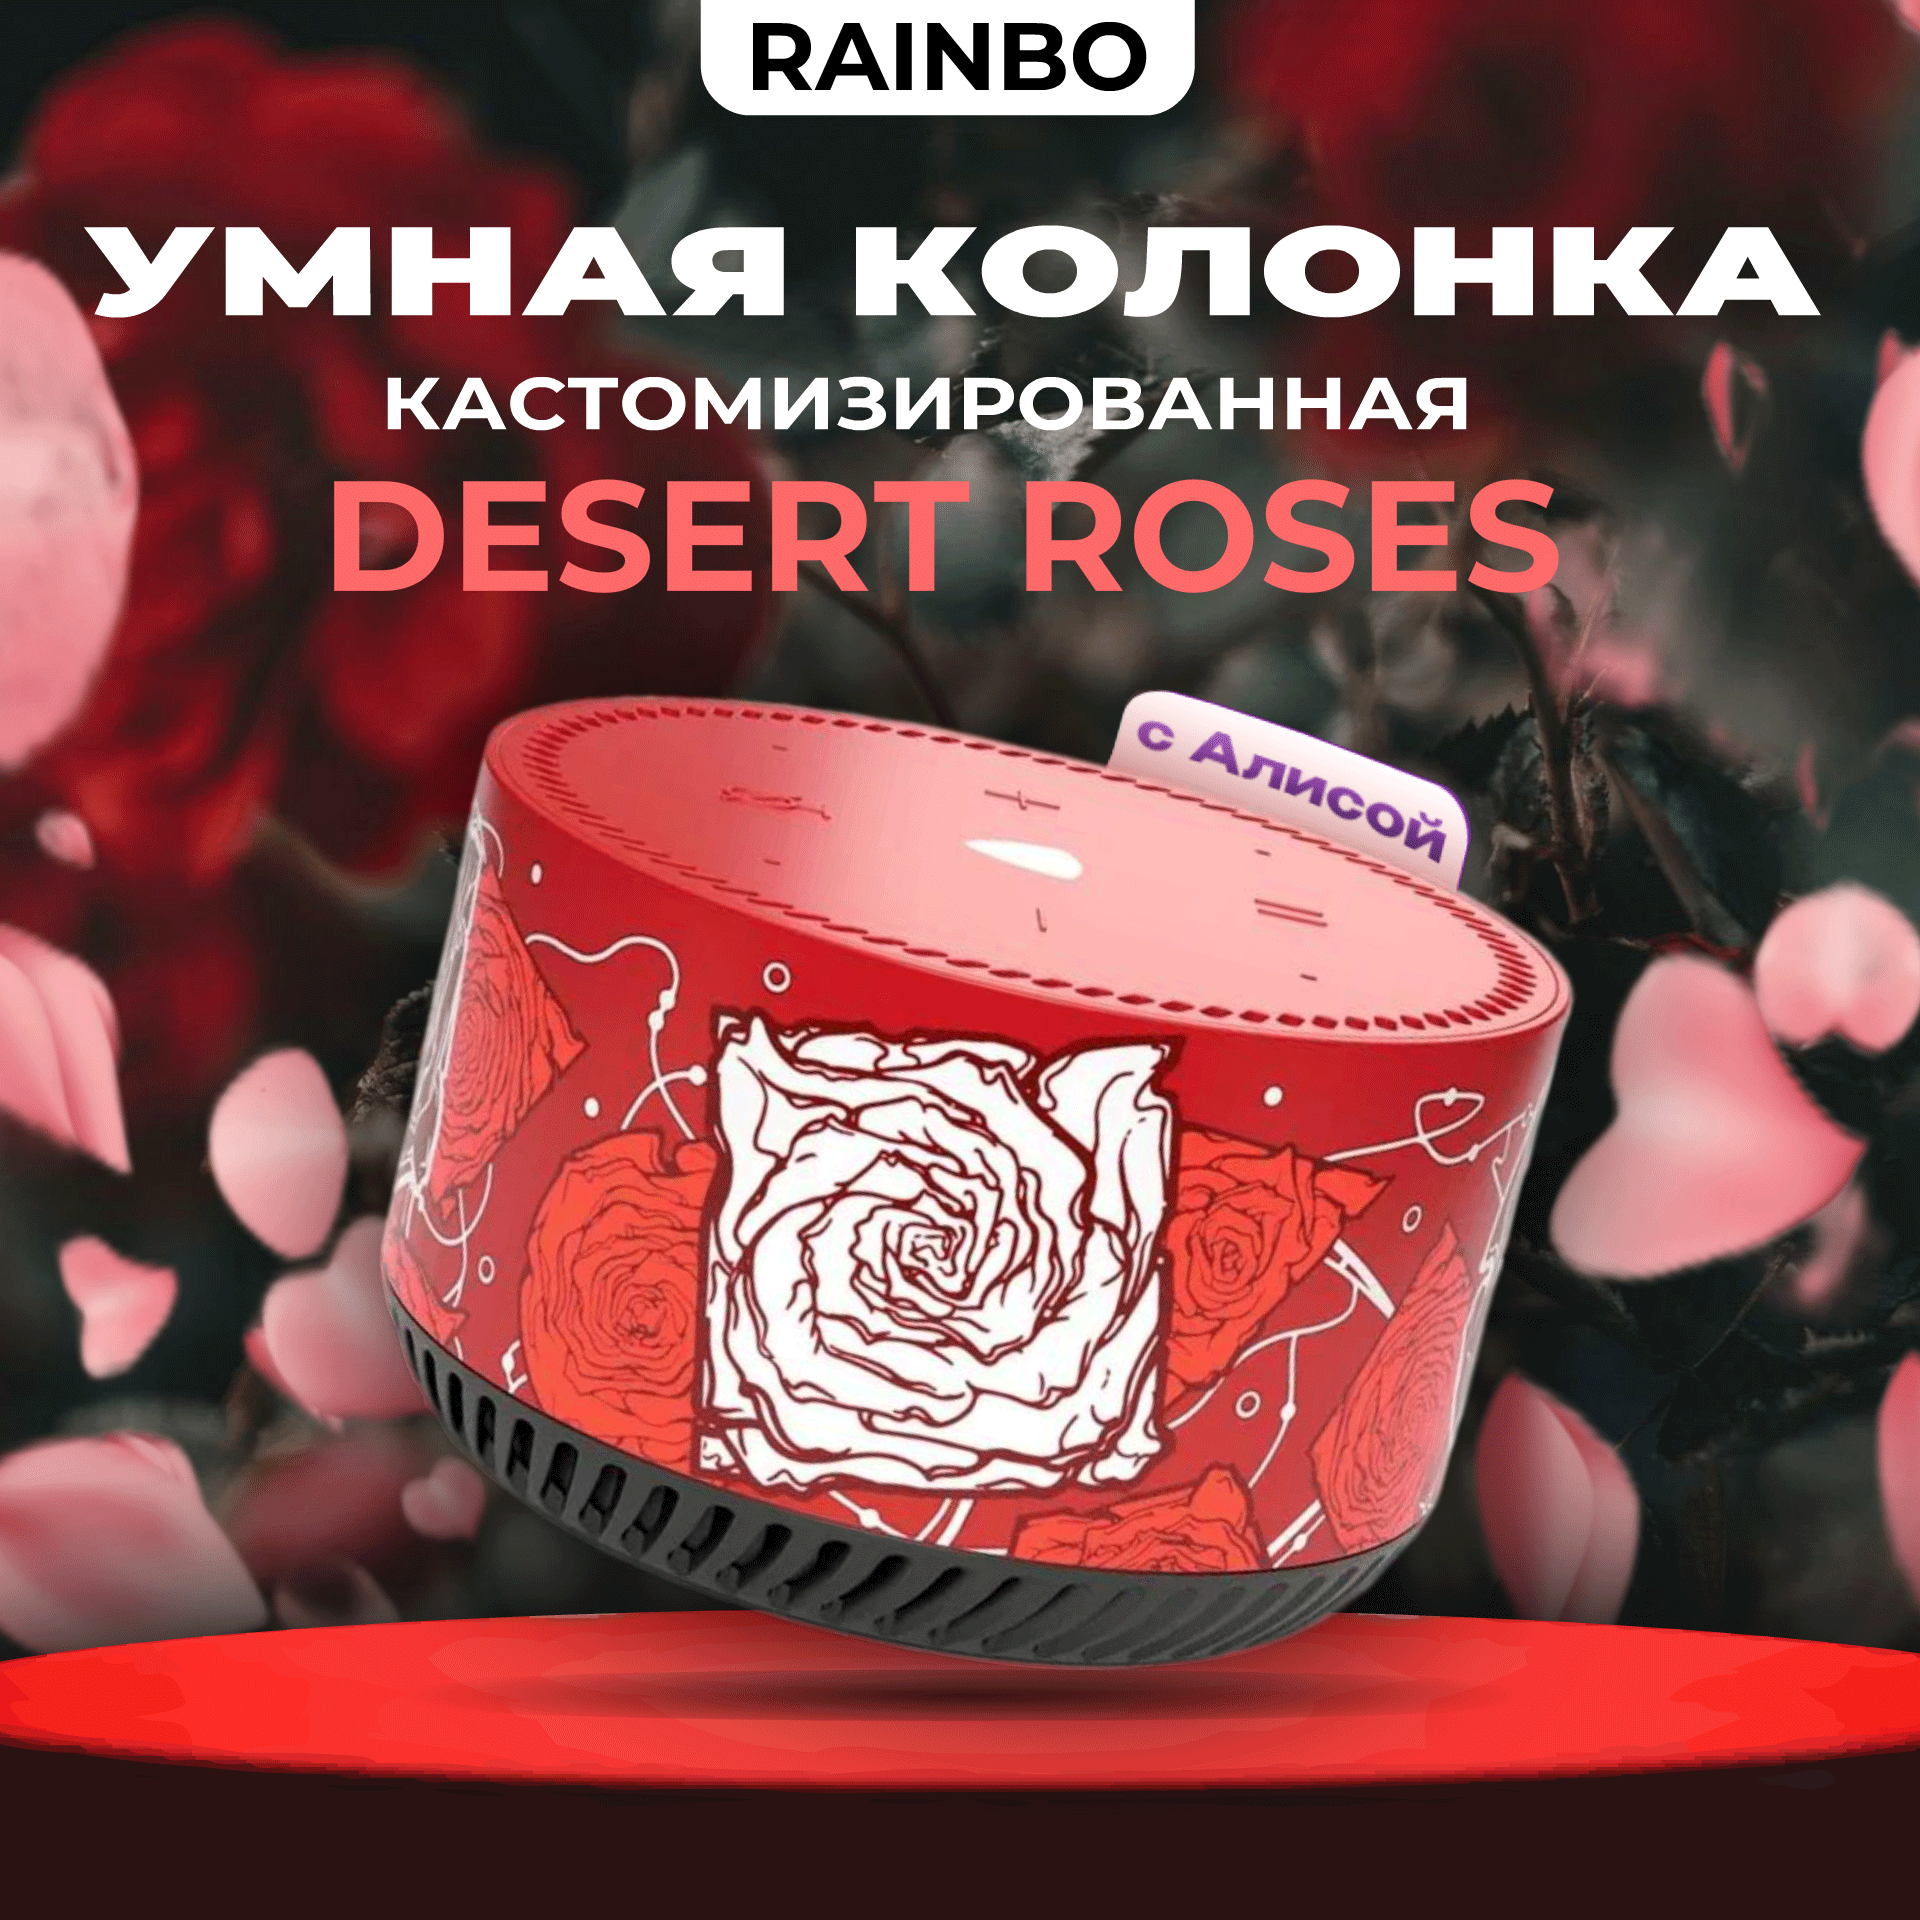 Умная колонка RAINBO Яндекс Станция Лайт "Desert Roses"